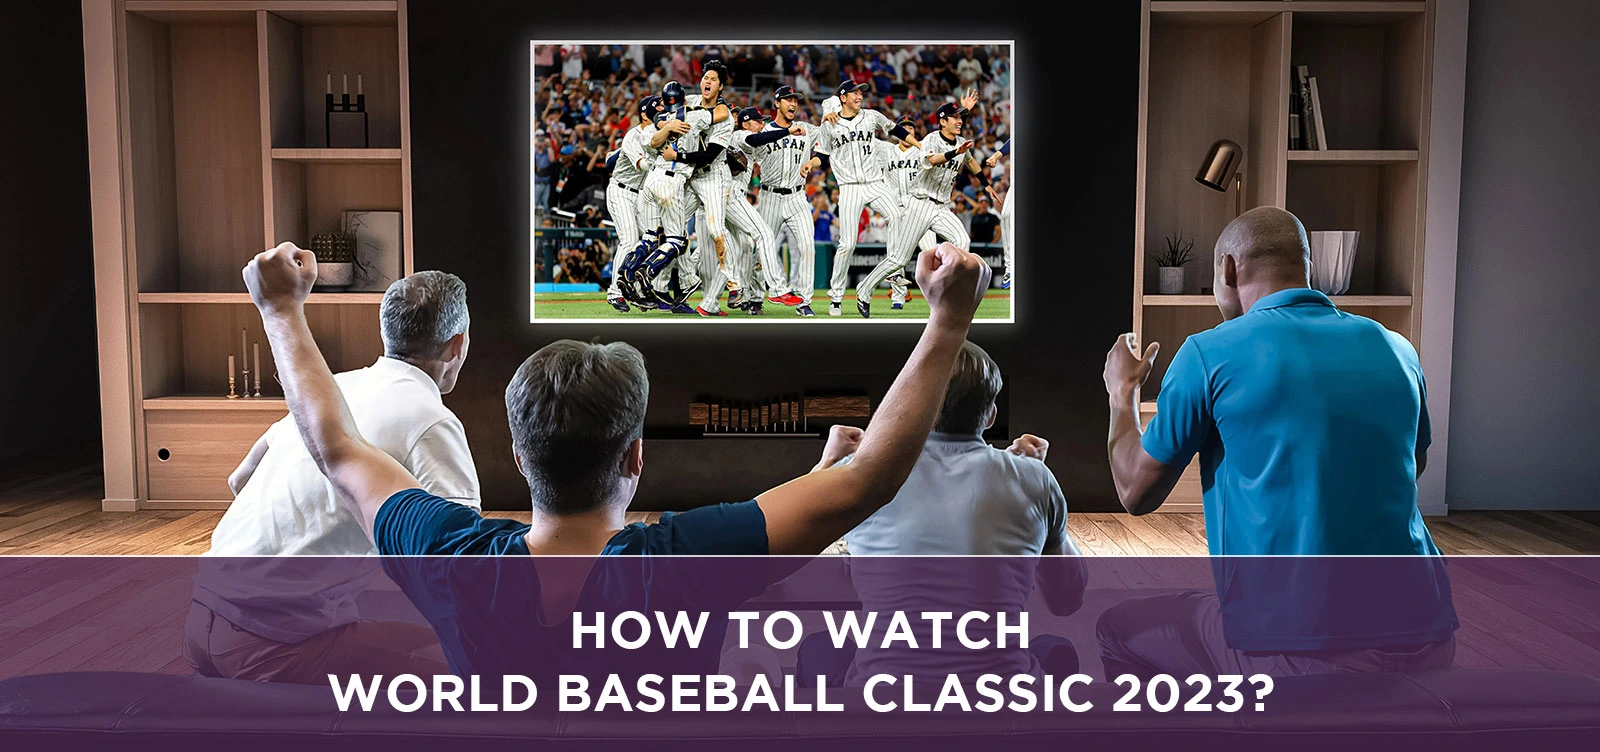 How to watch World Baseball Classic 2023?